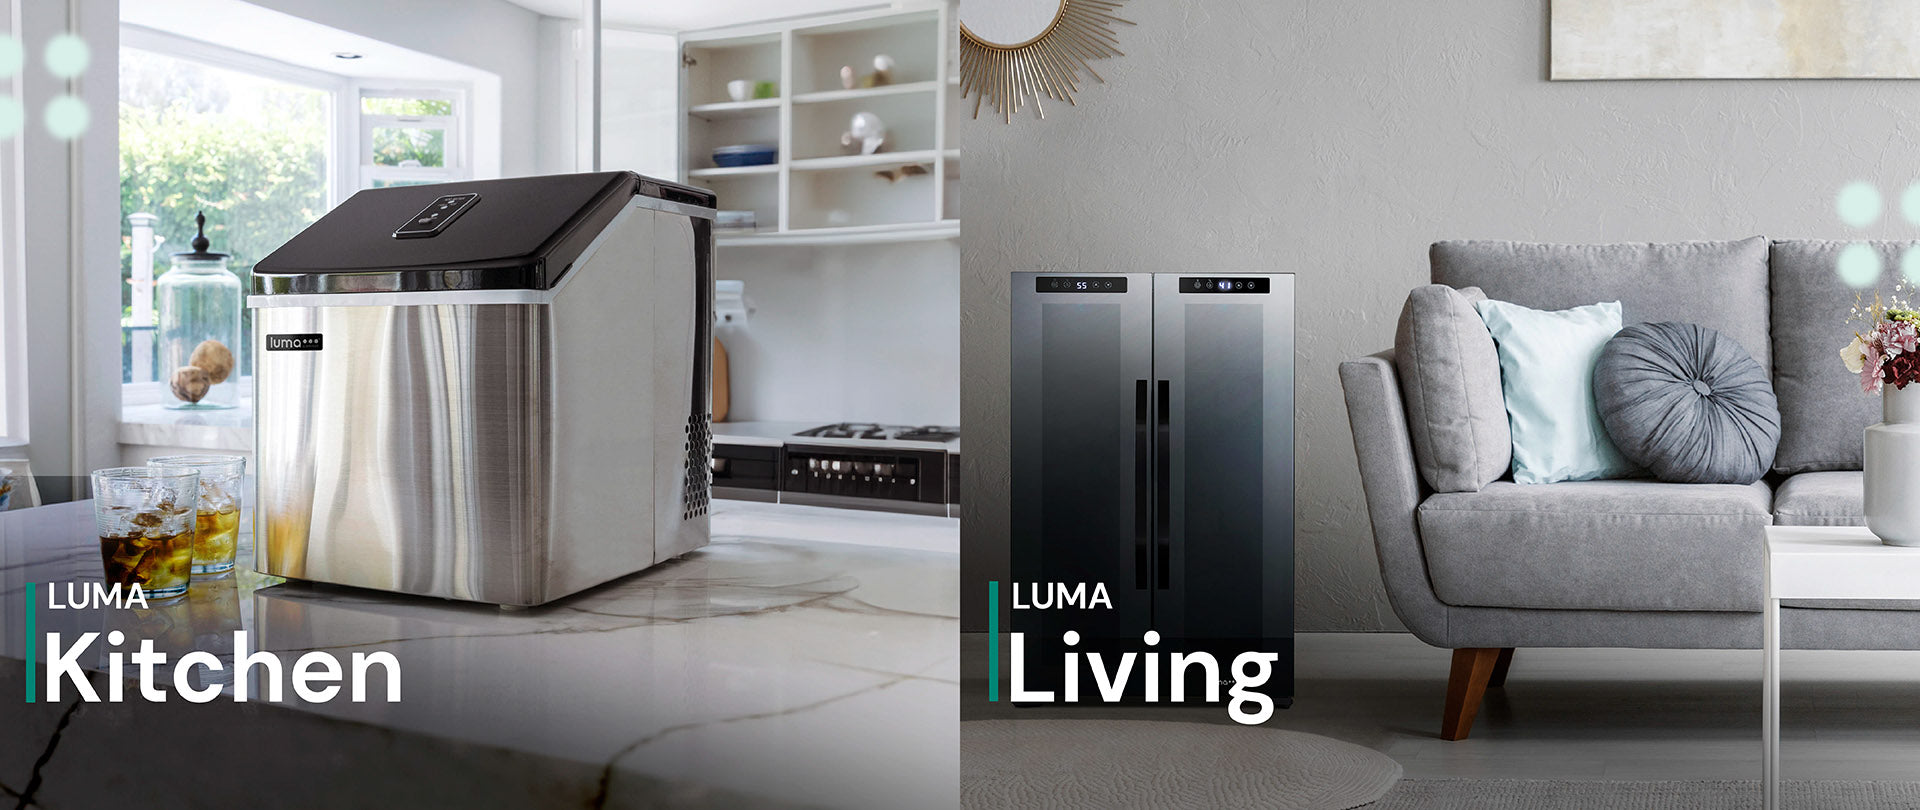 Luma kitchen and Luma Living lifestyle banner